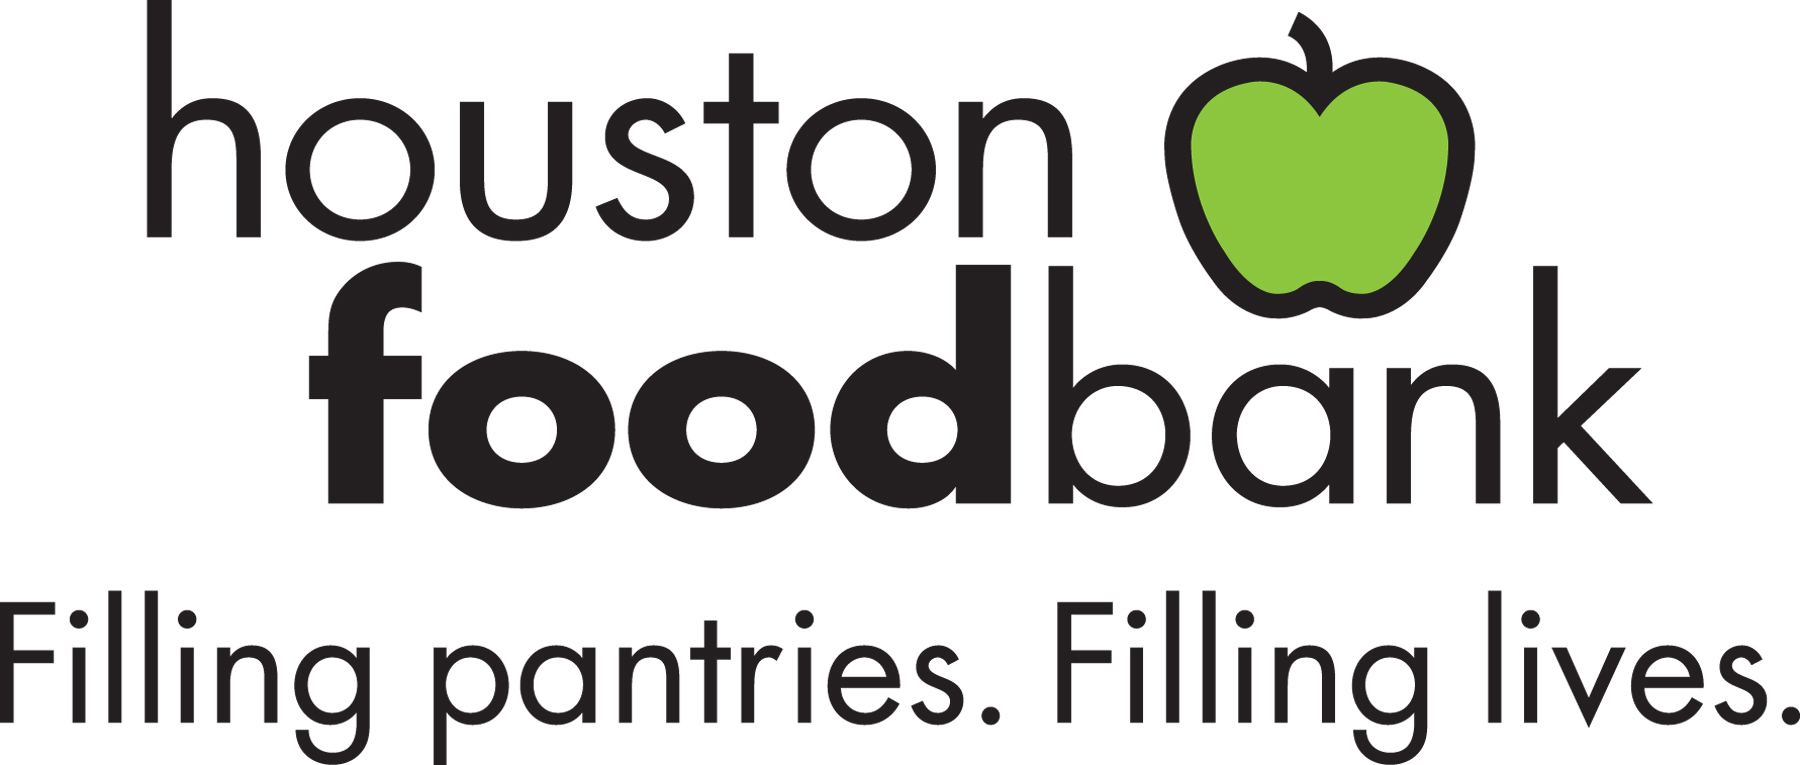 Kingwood Restaurants participate in Houston Restaurant Weeks